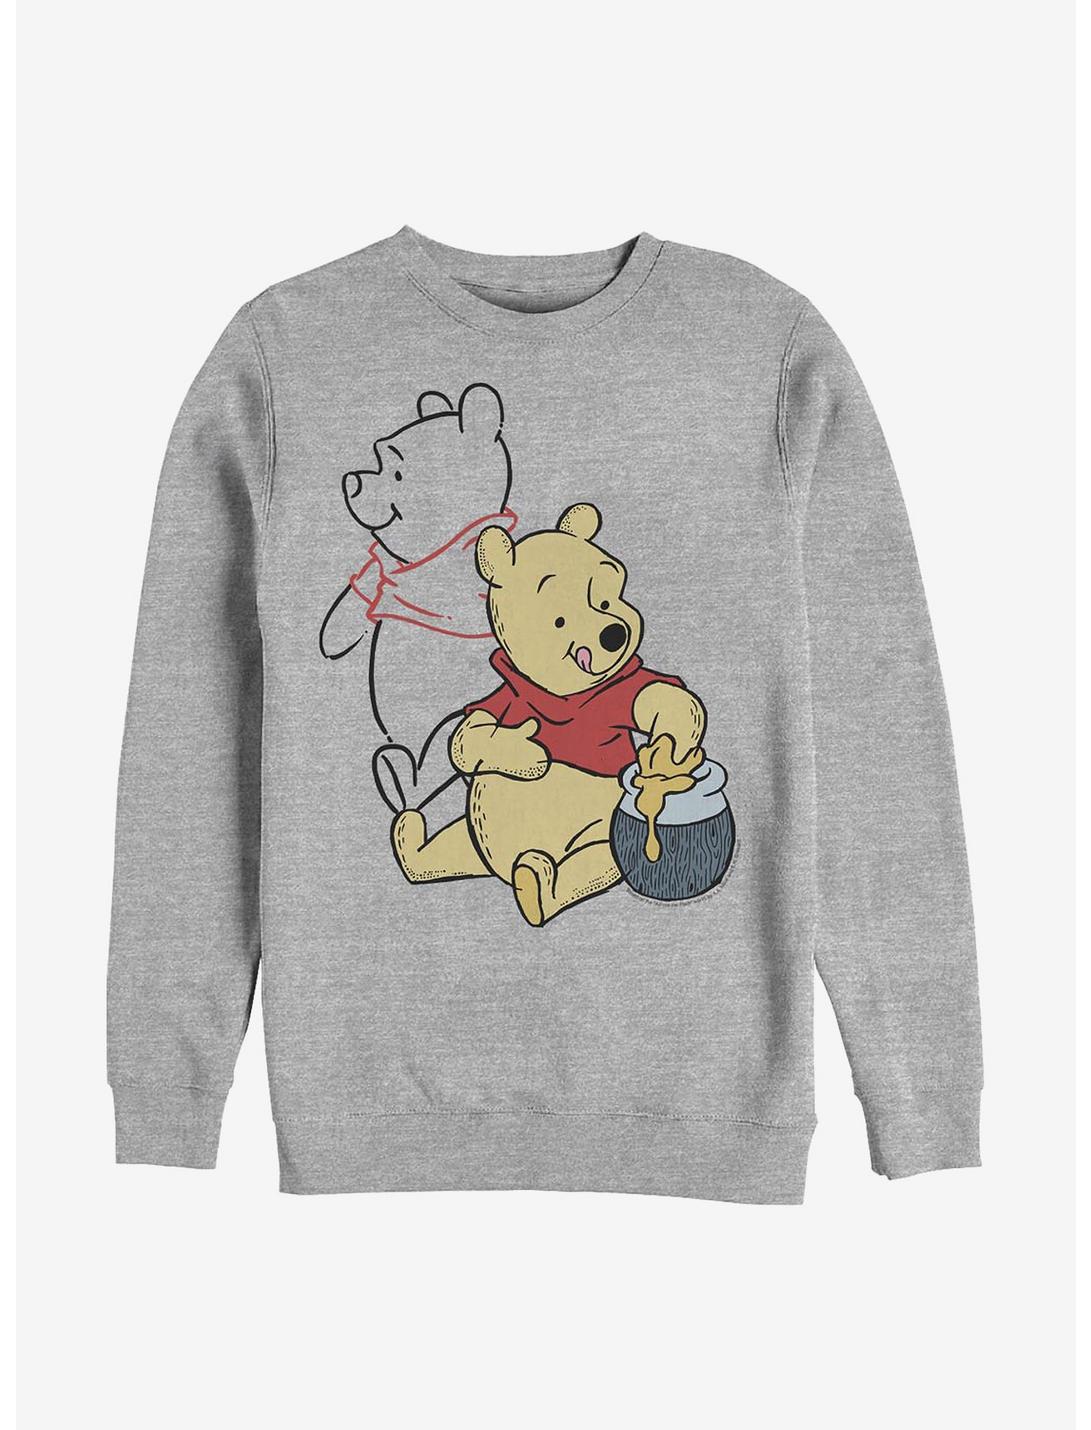 Disney Winnie The Pooh Line Art Crew Sweatshirt, ATH HTR, hi-res